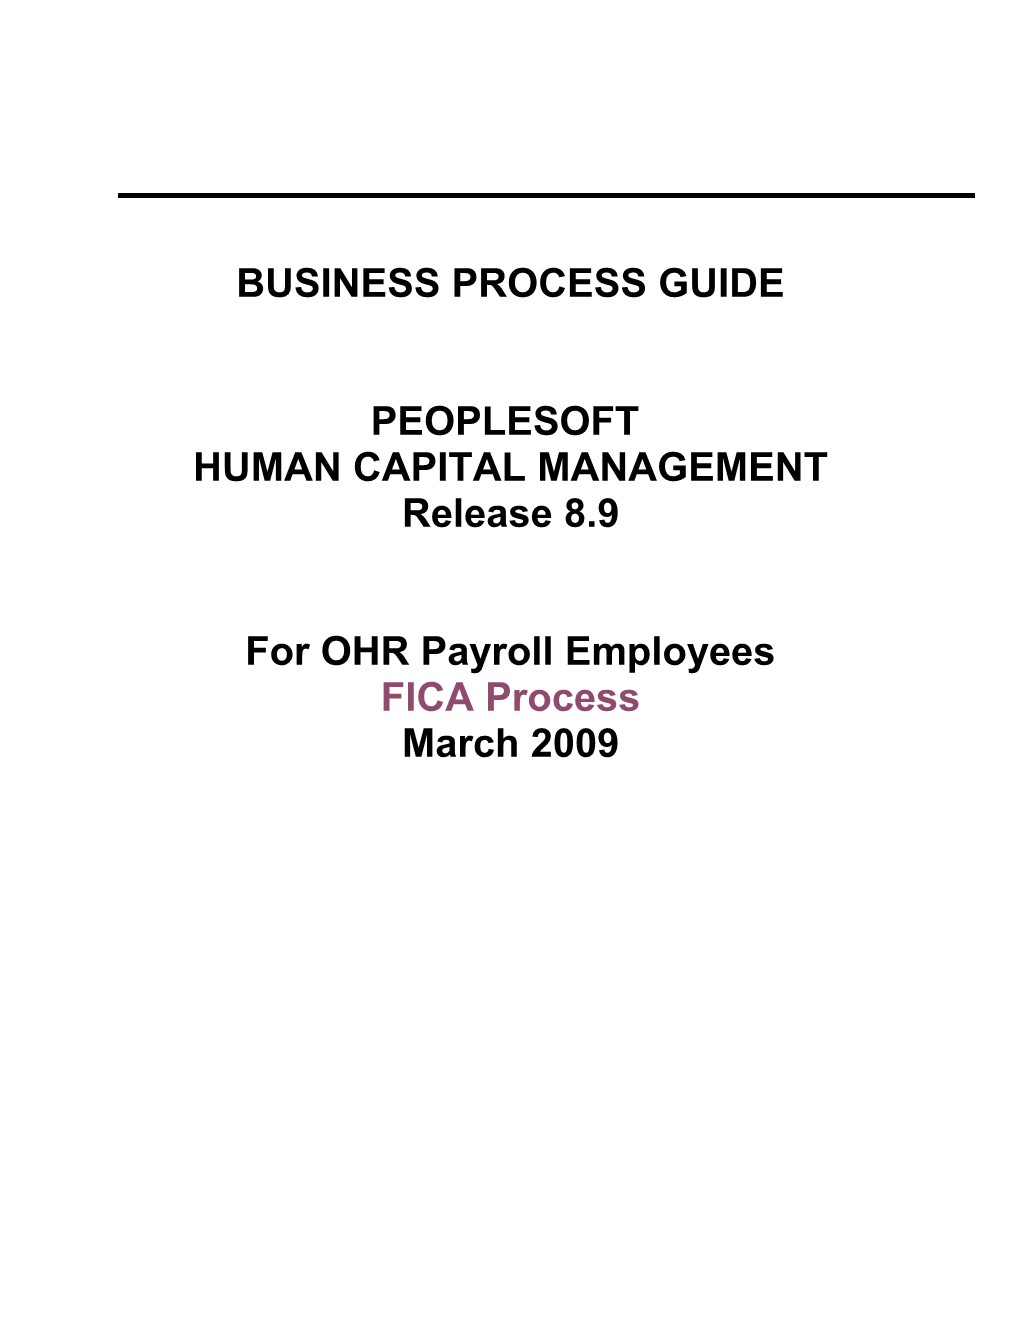 Business Process Guide HCM Release 8.9 Payroll FICA Flip